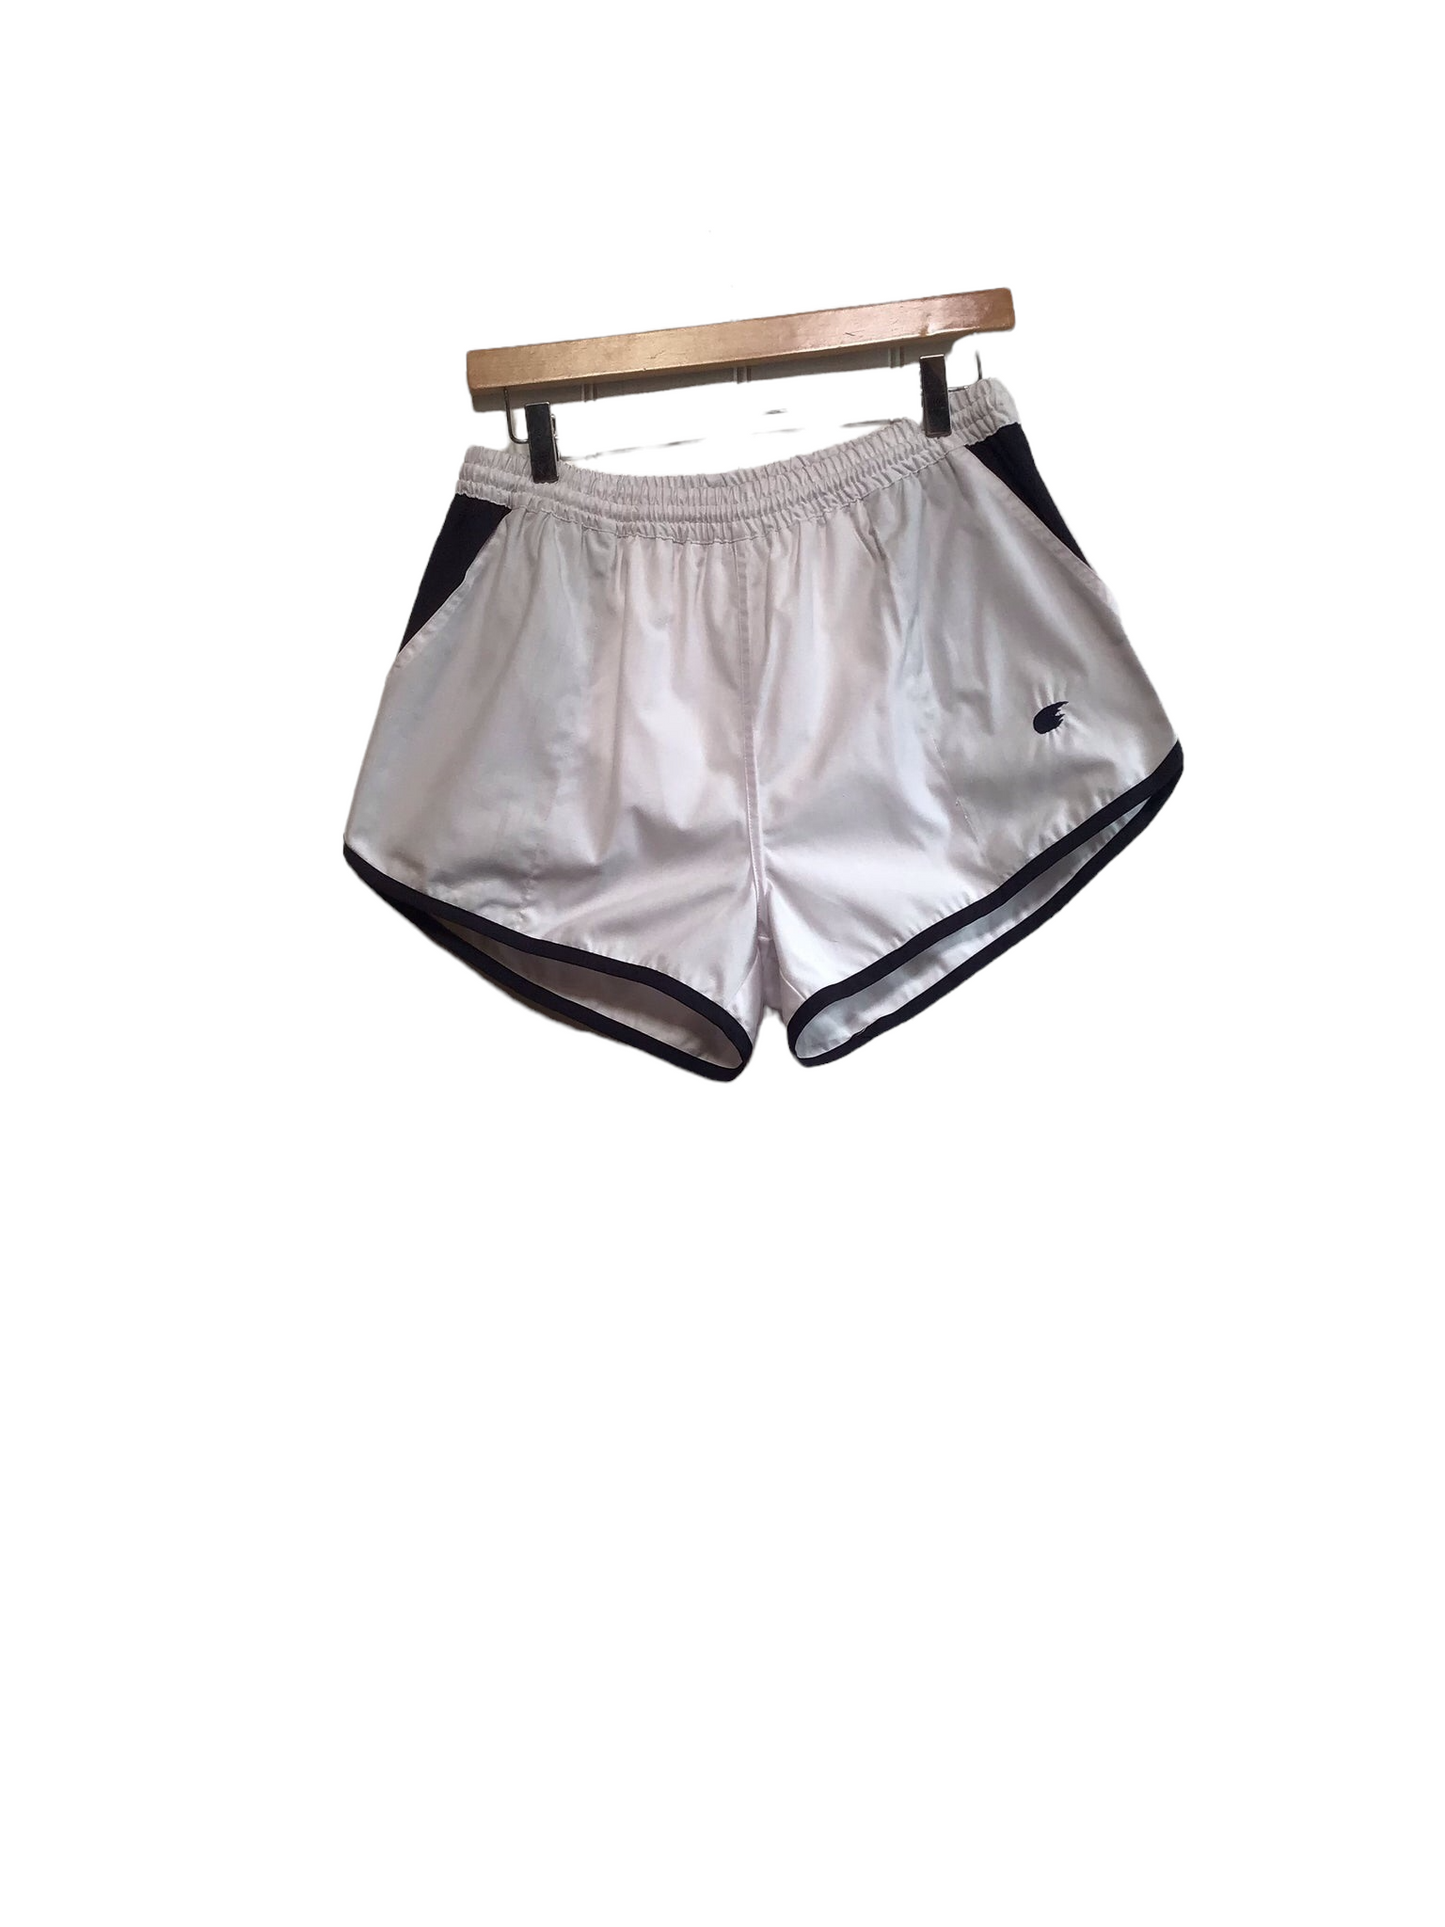 Oberstoff Sport Shorts (Size M)